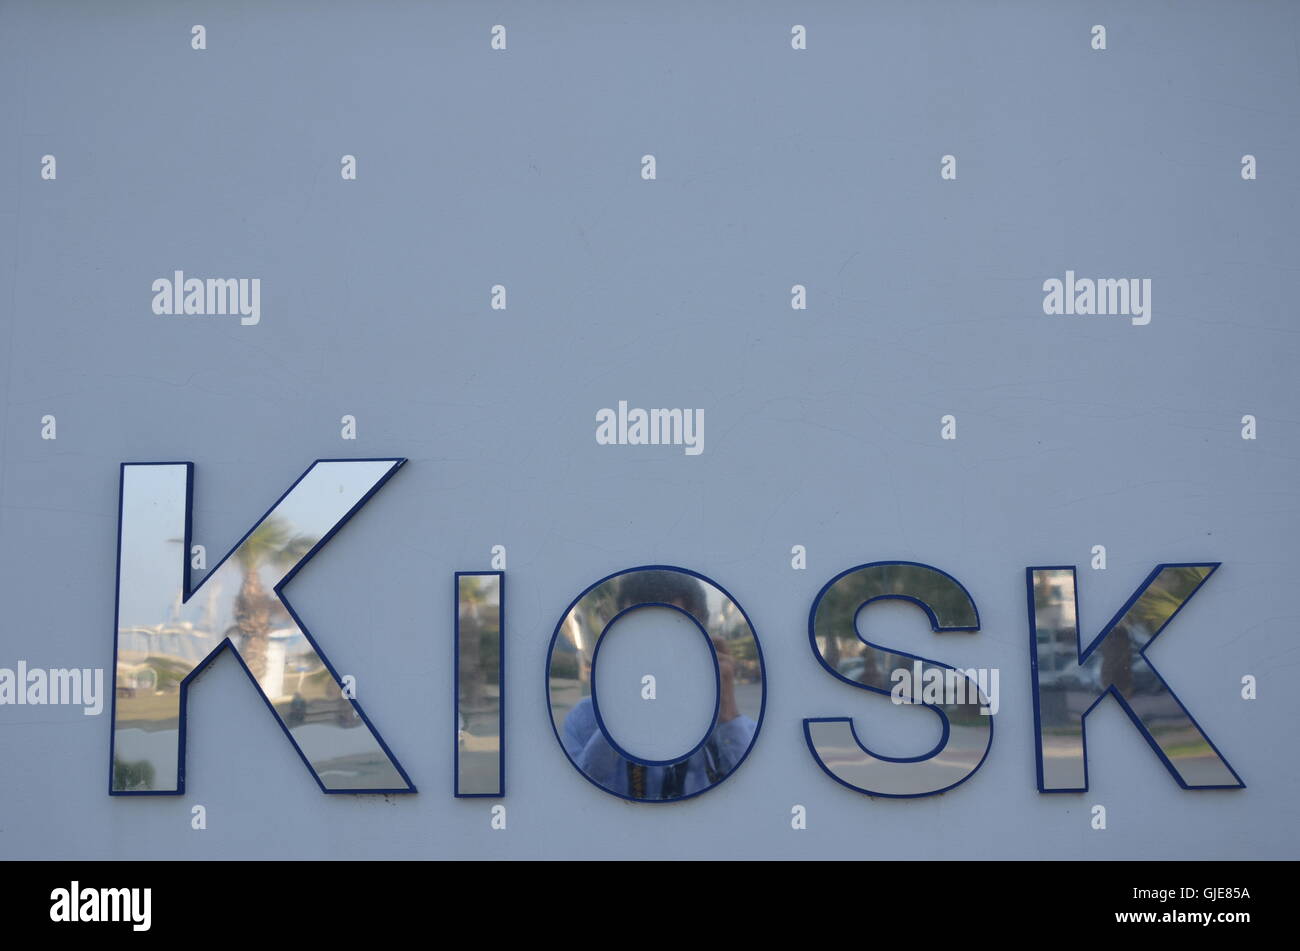 Kiosk reflections on letter Stock Photo